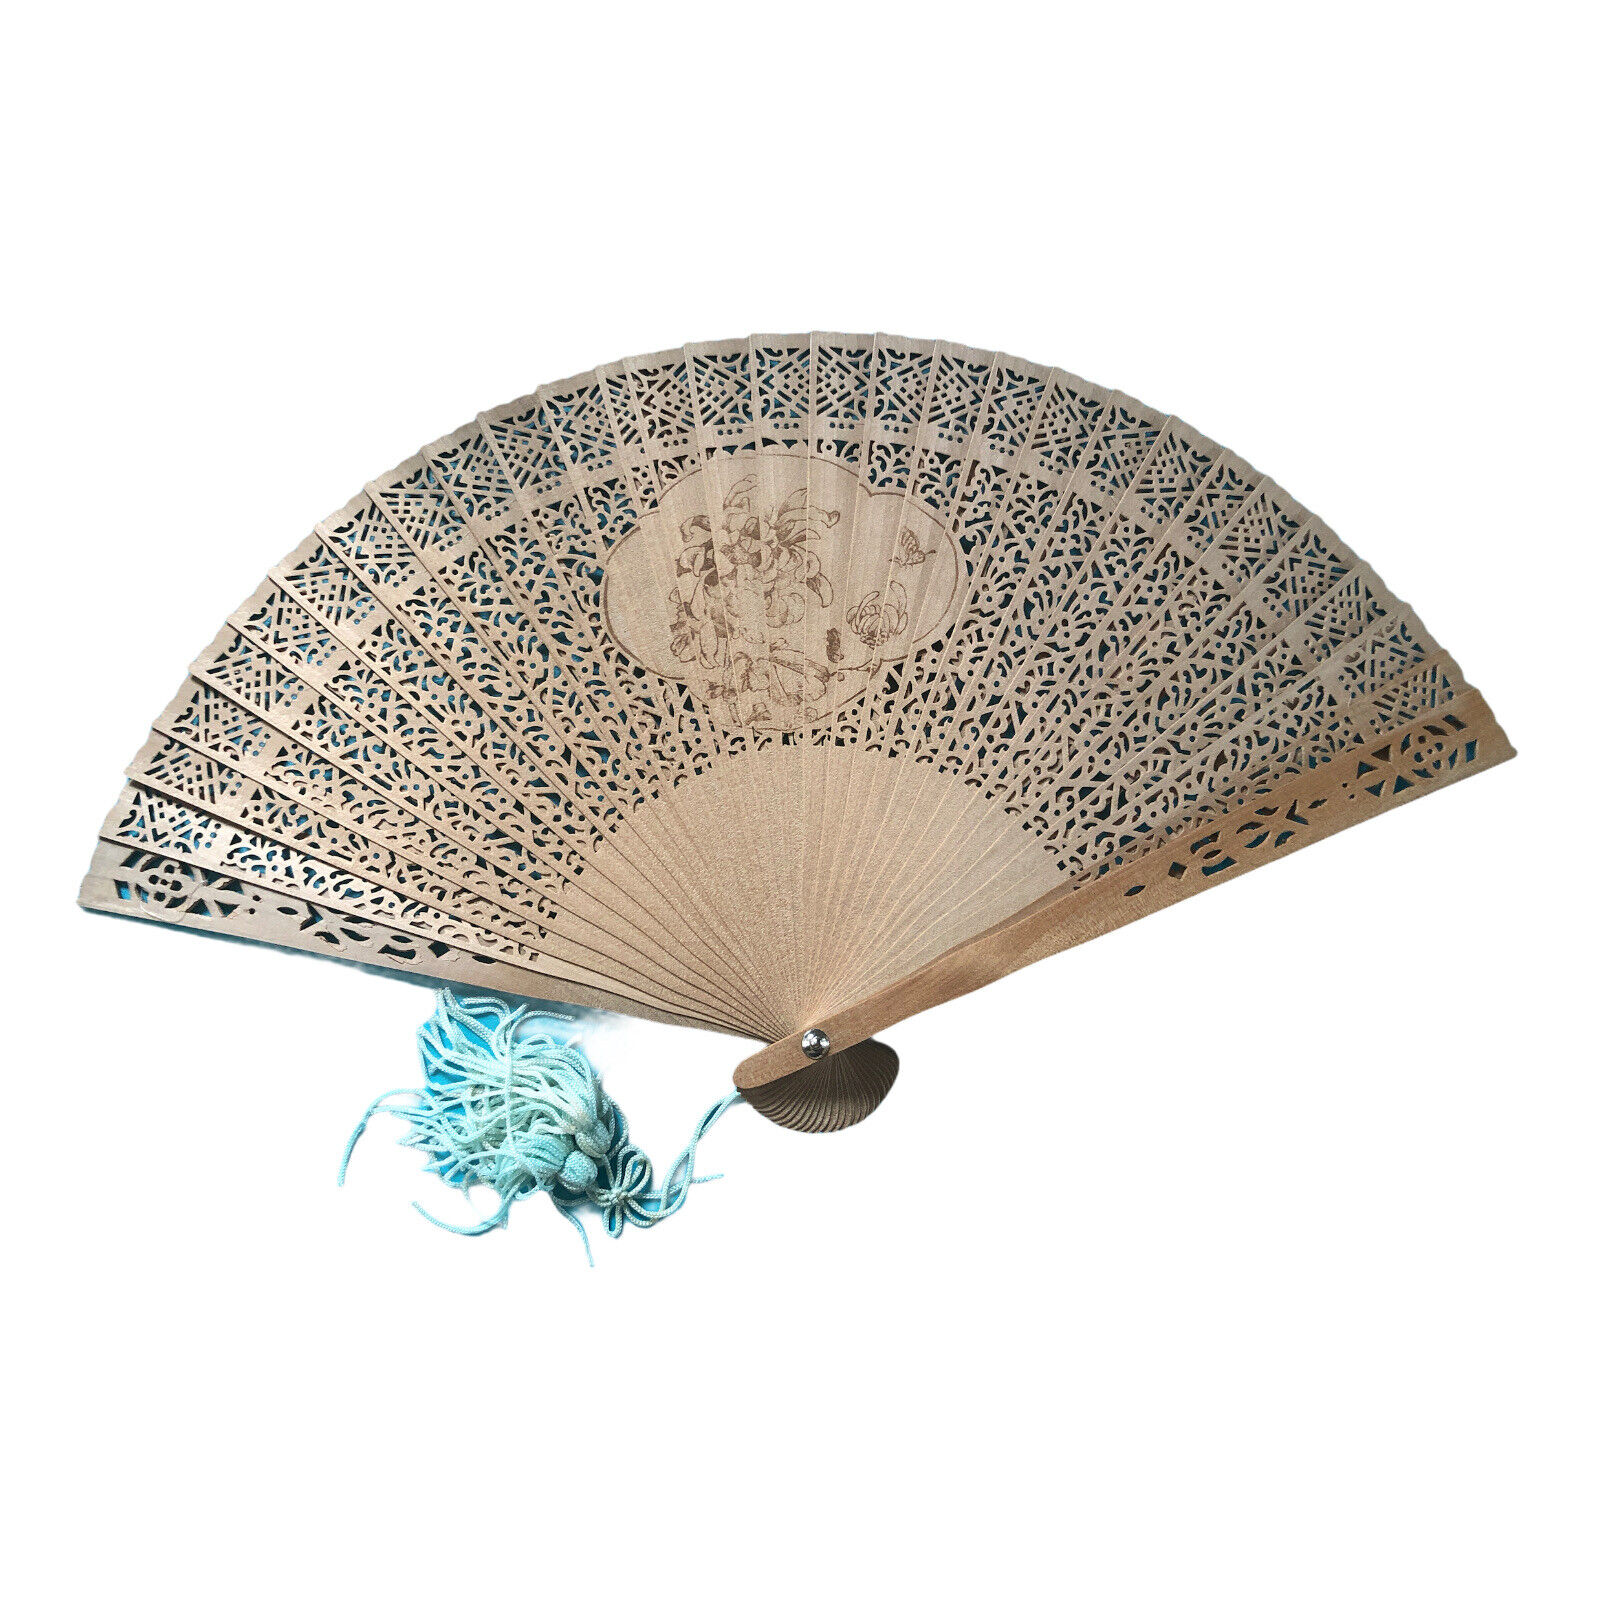 Vintage Asian Chinese Carved Wooden Hand Held Folding Fan w/ Aqua Tassel